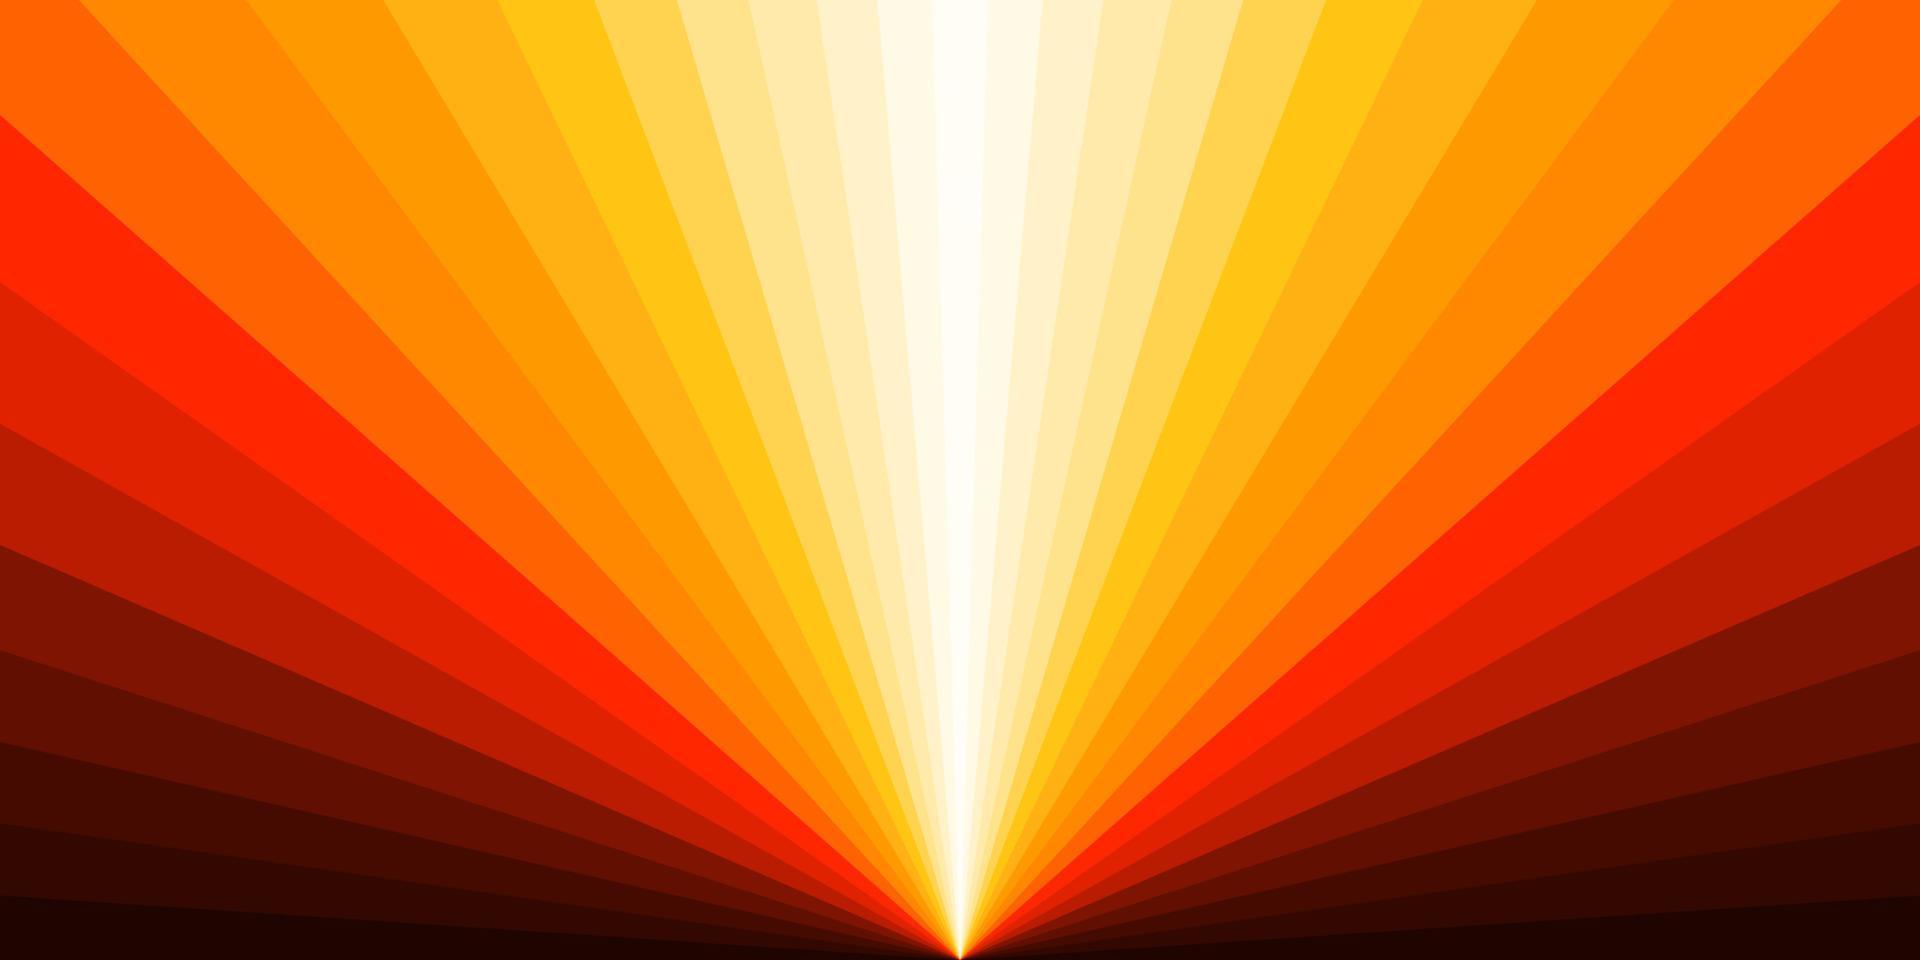 abstrakt soluppgång bakgrund mall. färgrik Sol stråle design grafisk. vektor